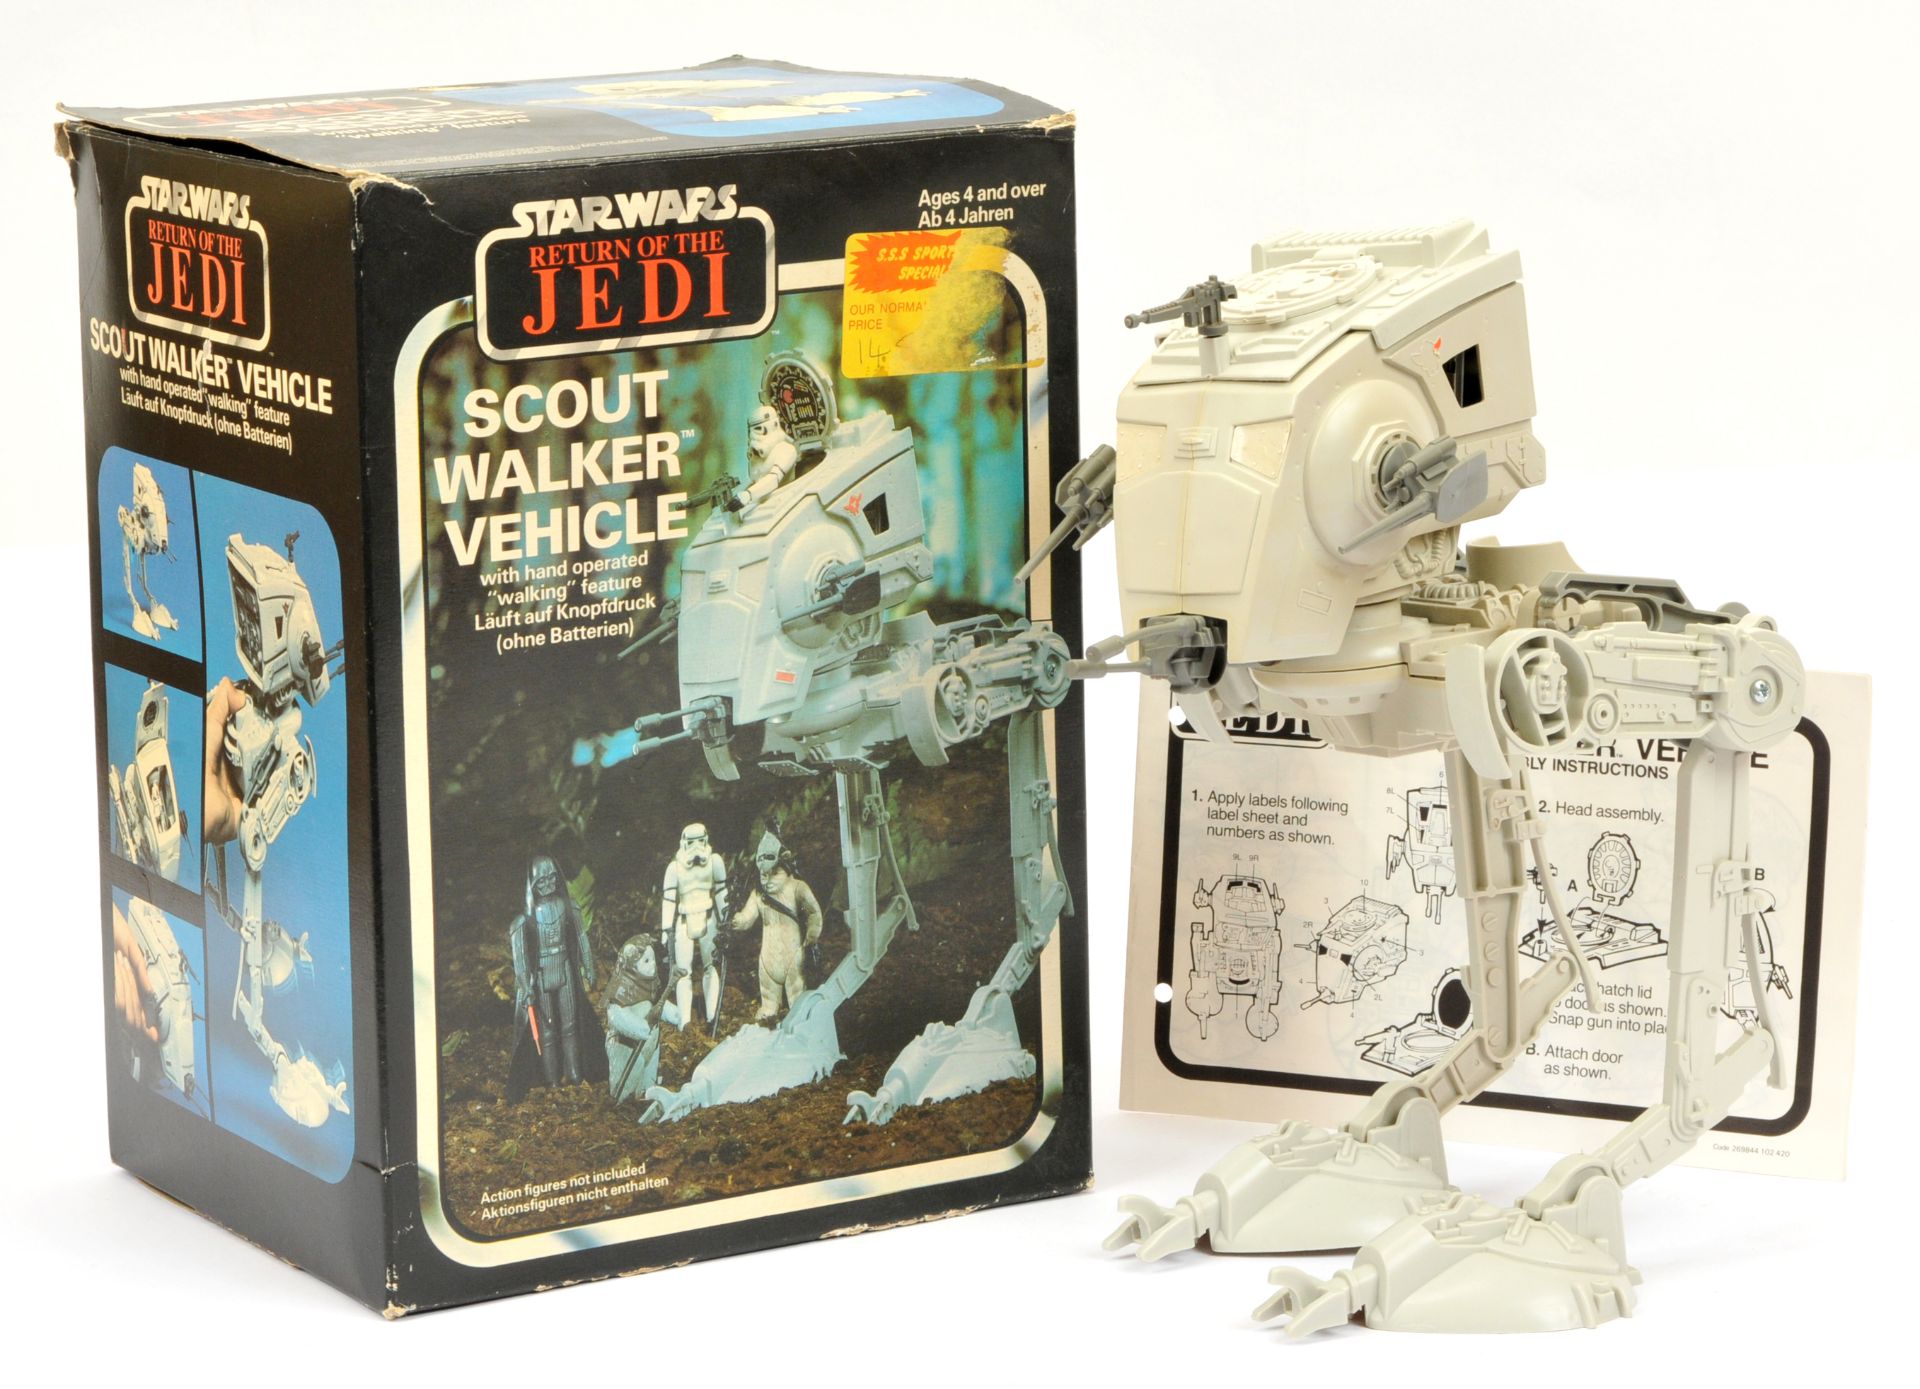 Palitoy Star Wars vintage Return of the Jedi Scout Walker